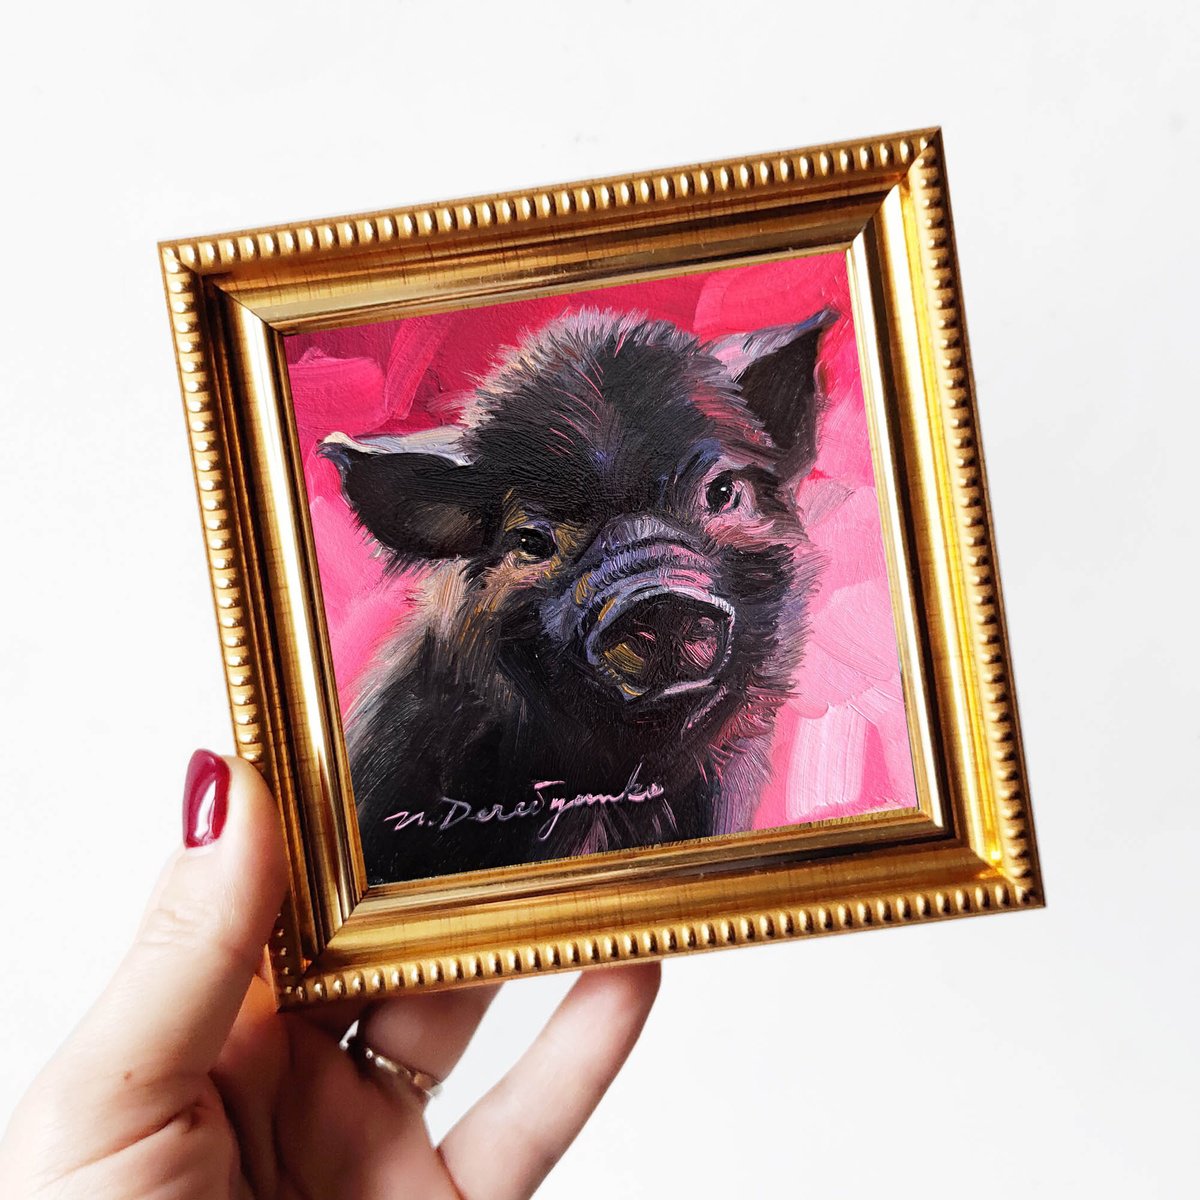 Black pig portrait by Nataly Derevyanko